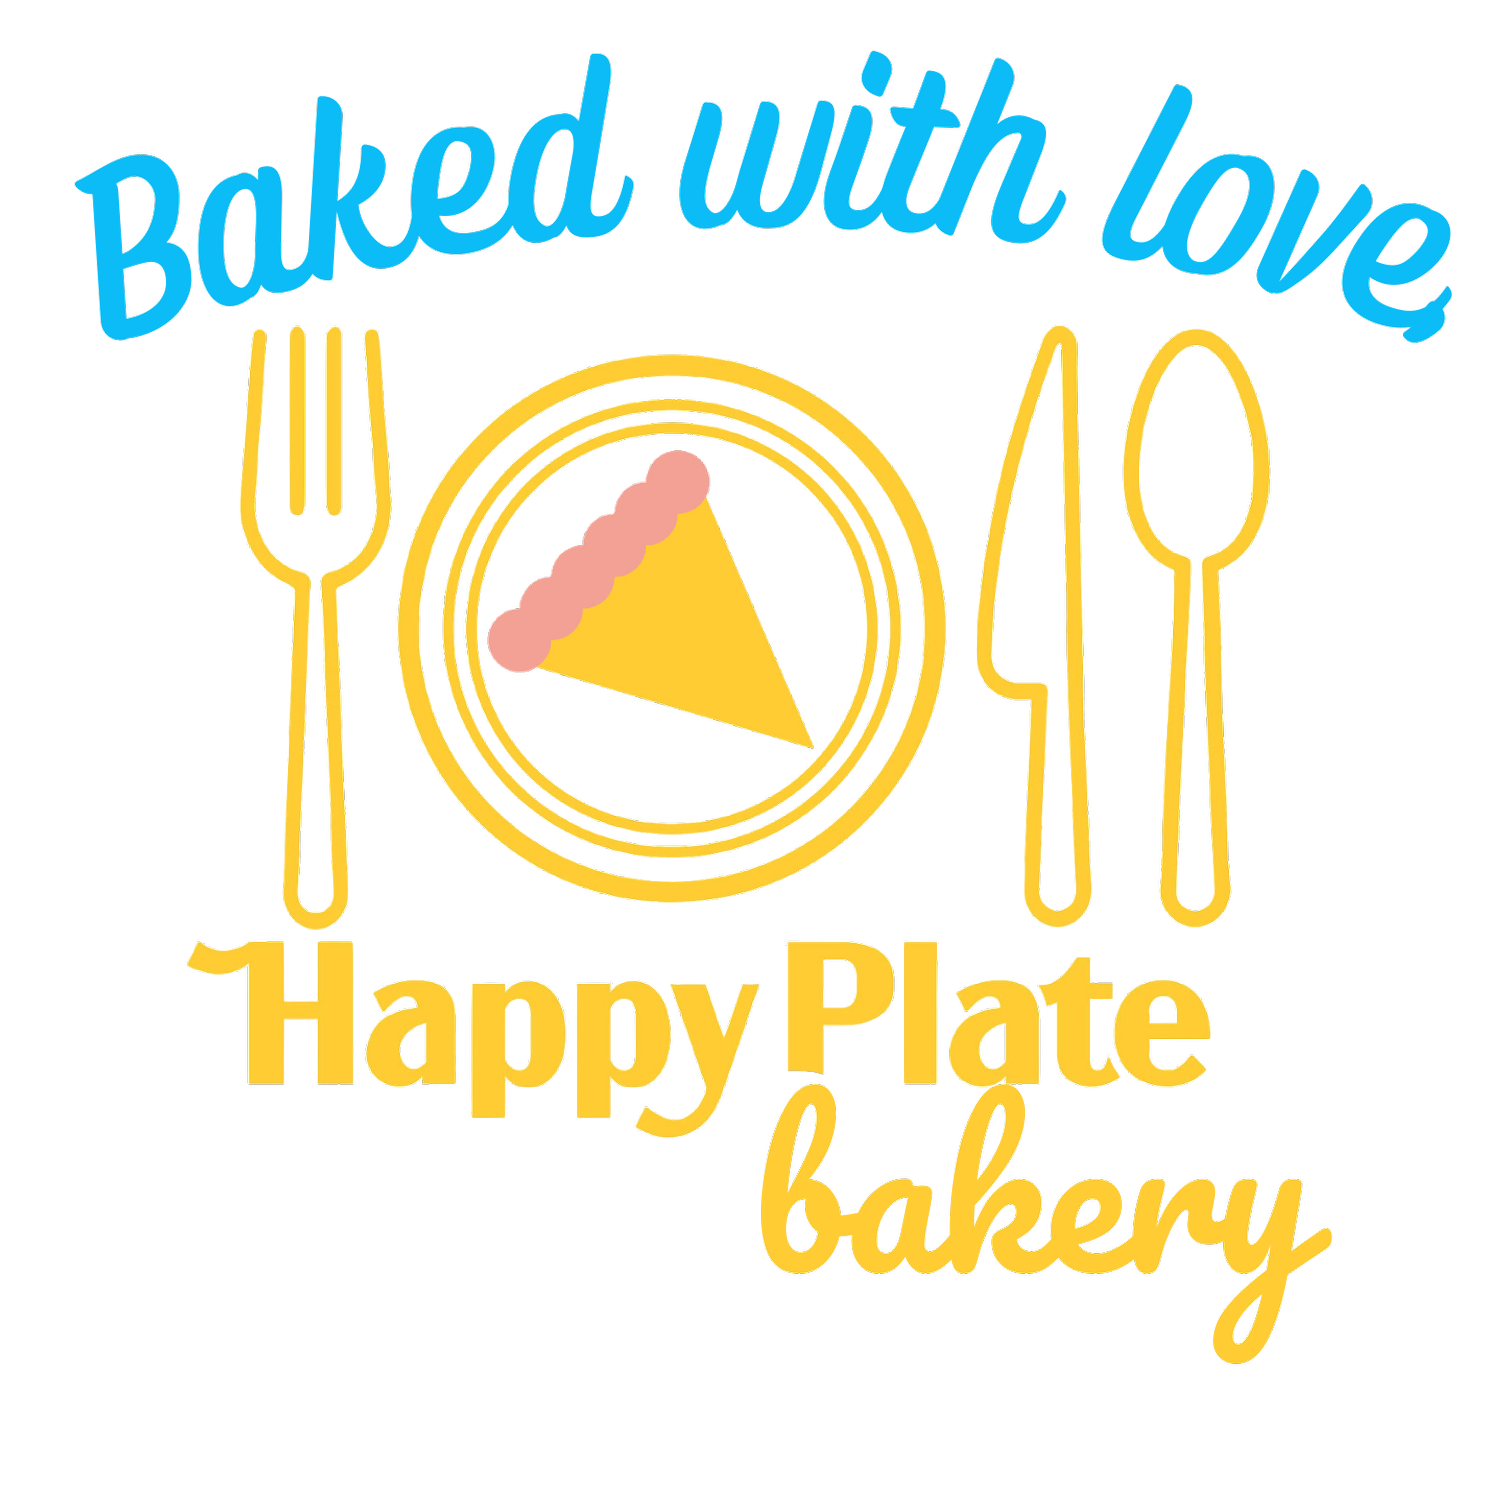 Happy Plate Bakery